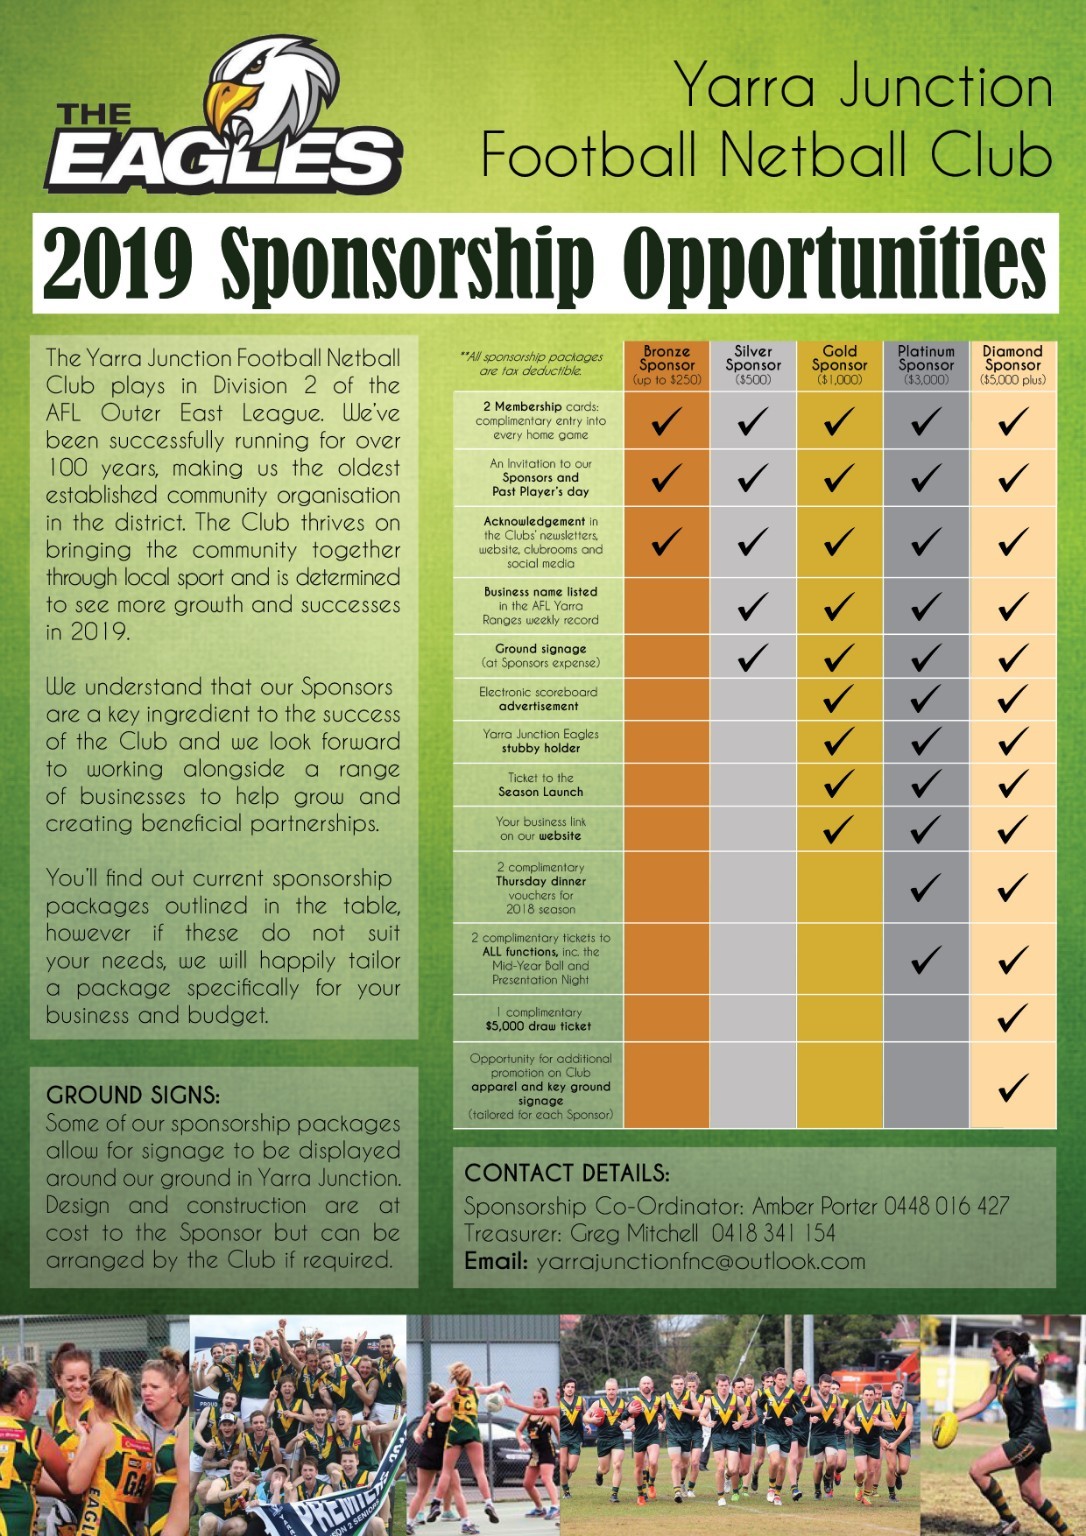 2019 Sponsorship Package Yarra Junction Football Club Incorporated